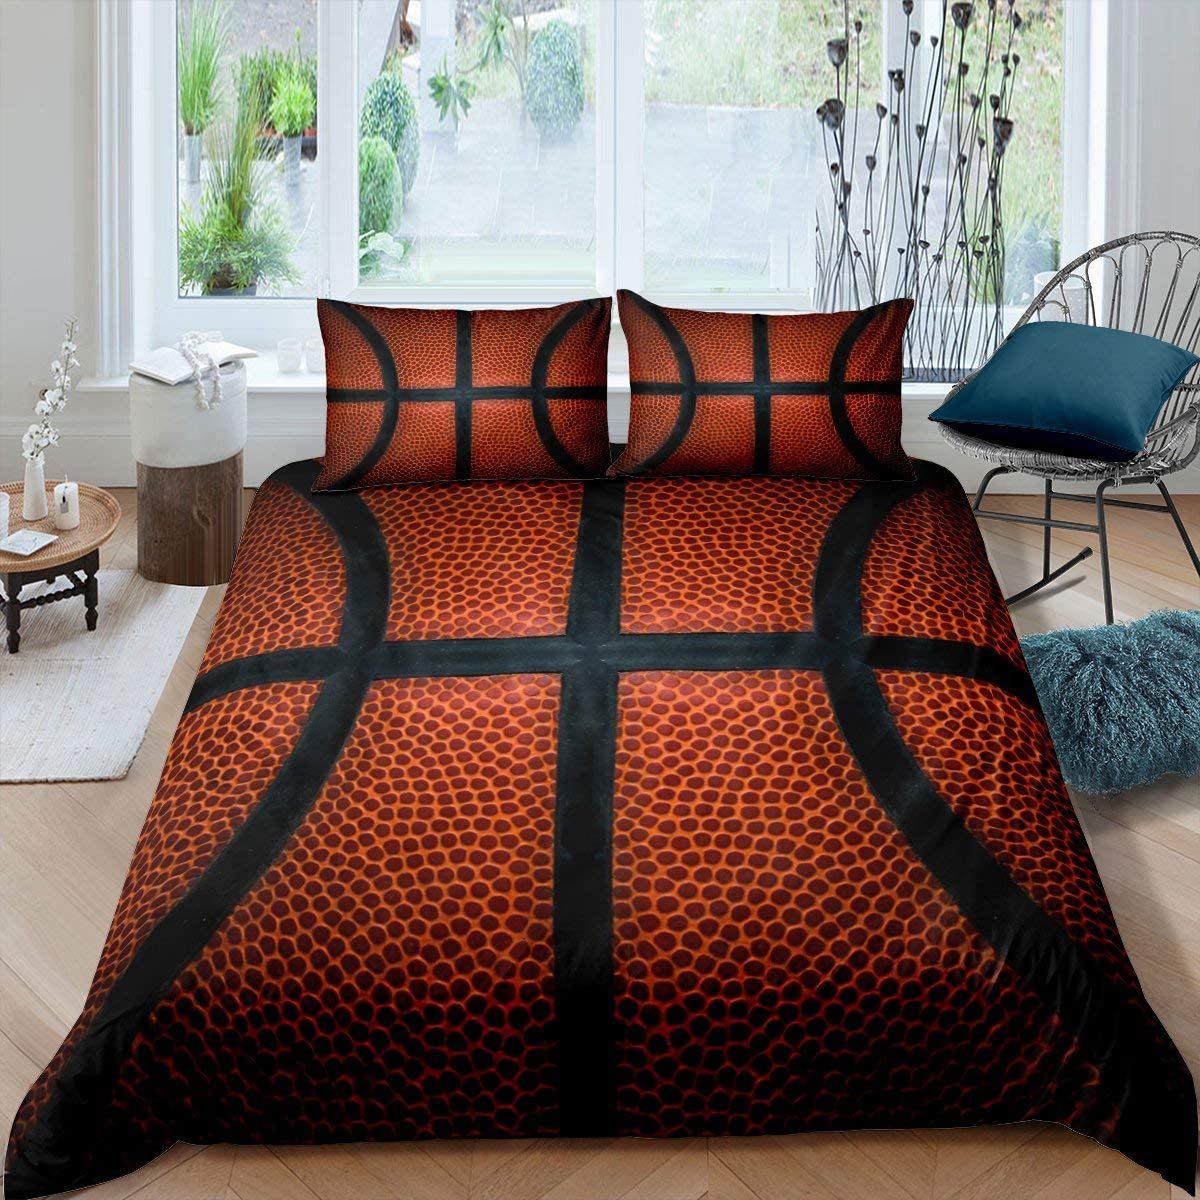 Basketball Bedding Set